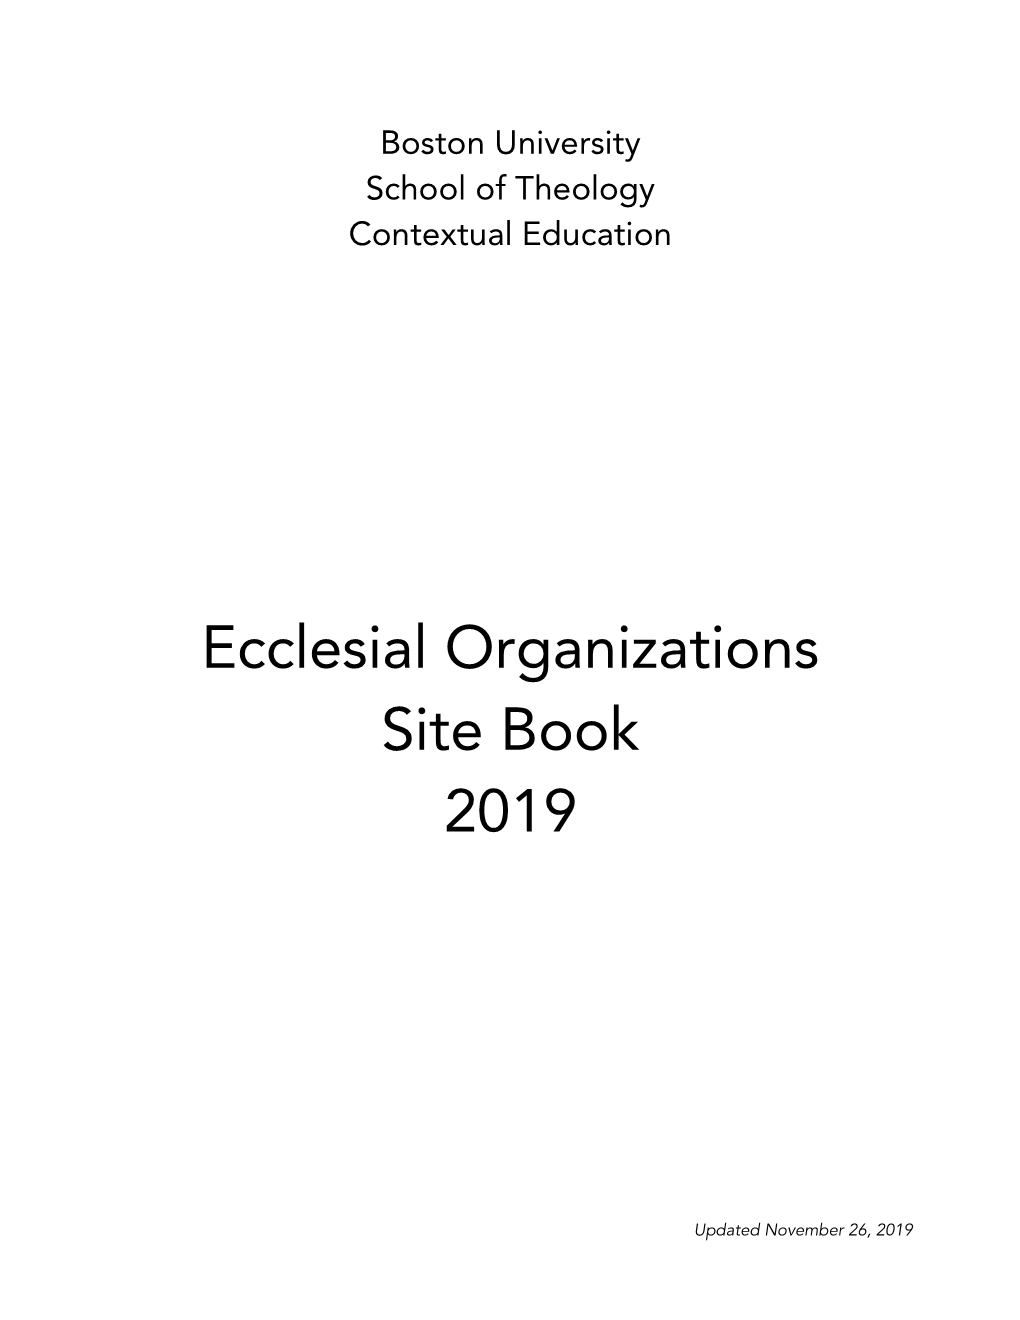 Ecclesial Organizations Site Book 2019